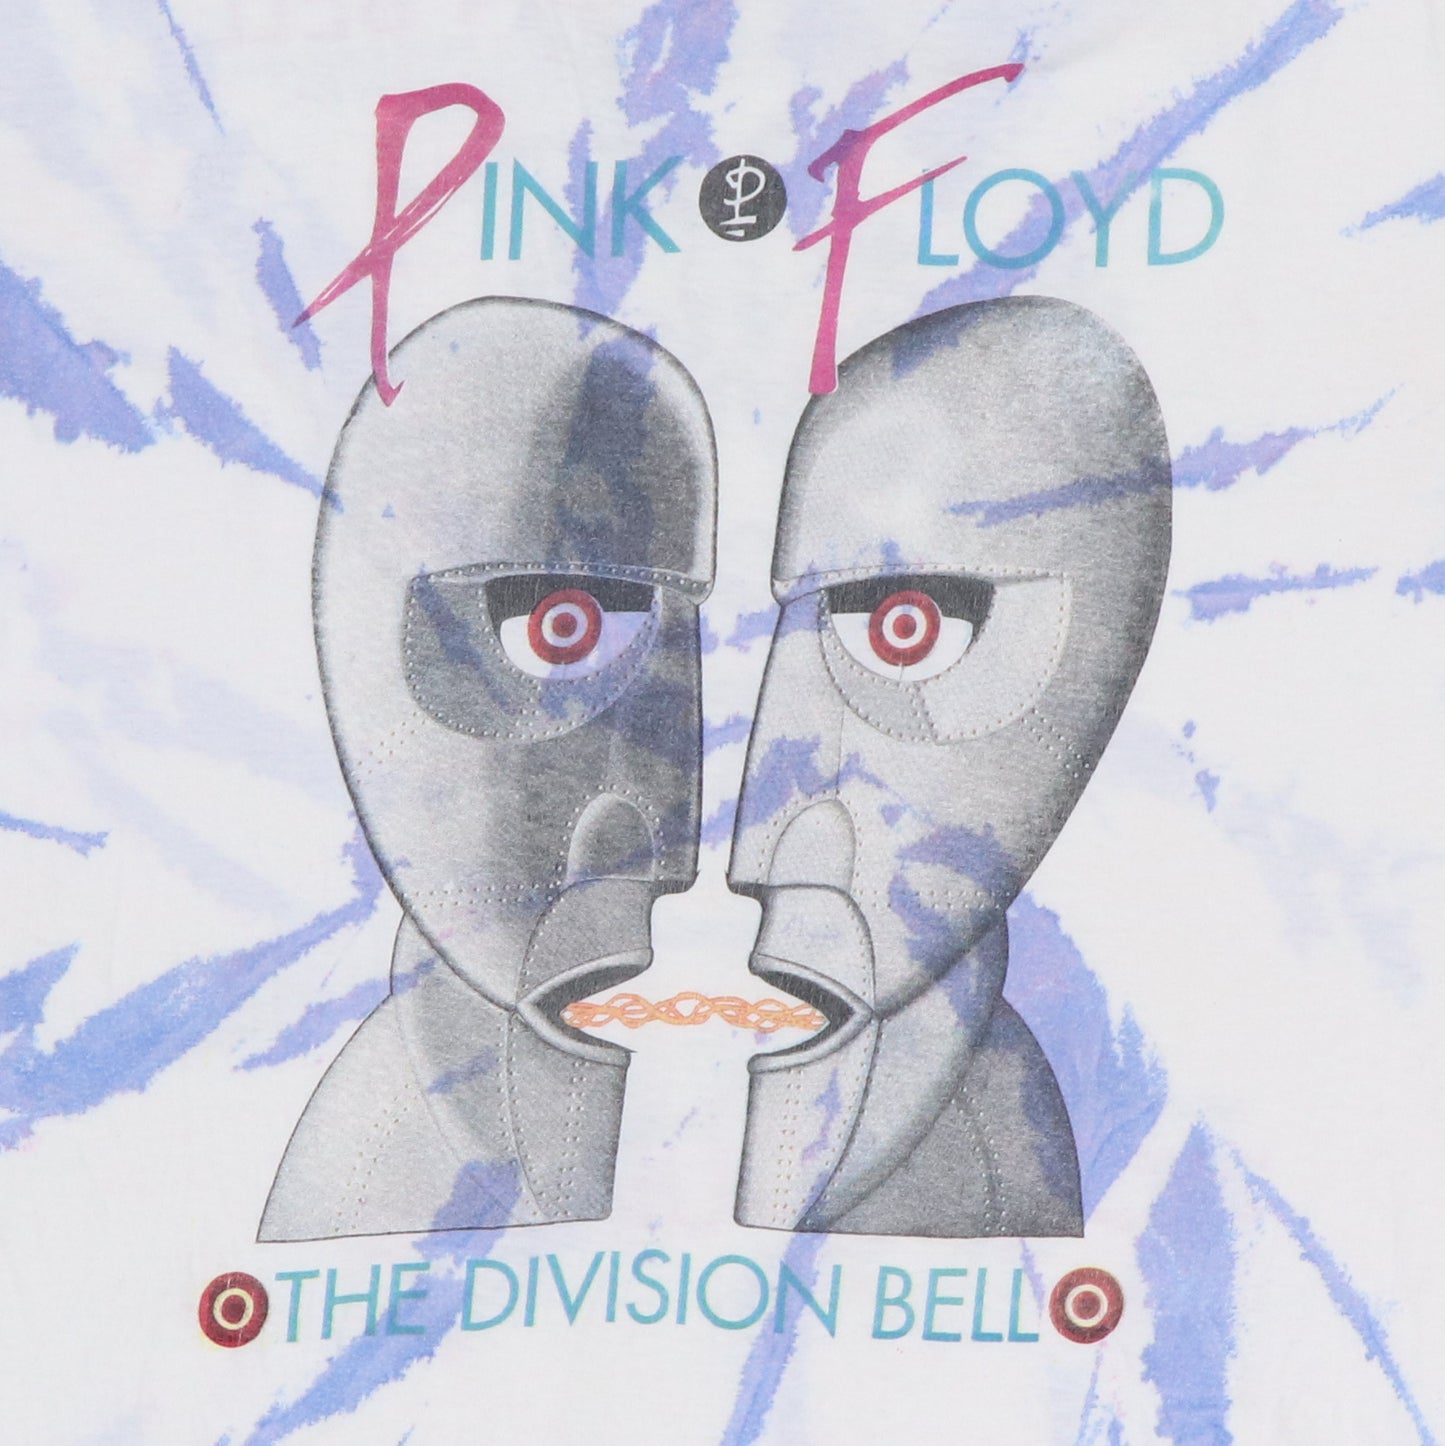 1994 Pink Floyd Division Bell Tour Shirt